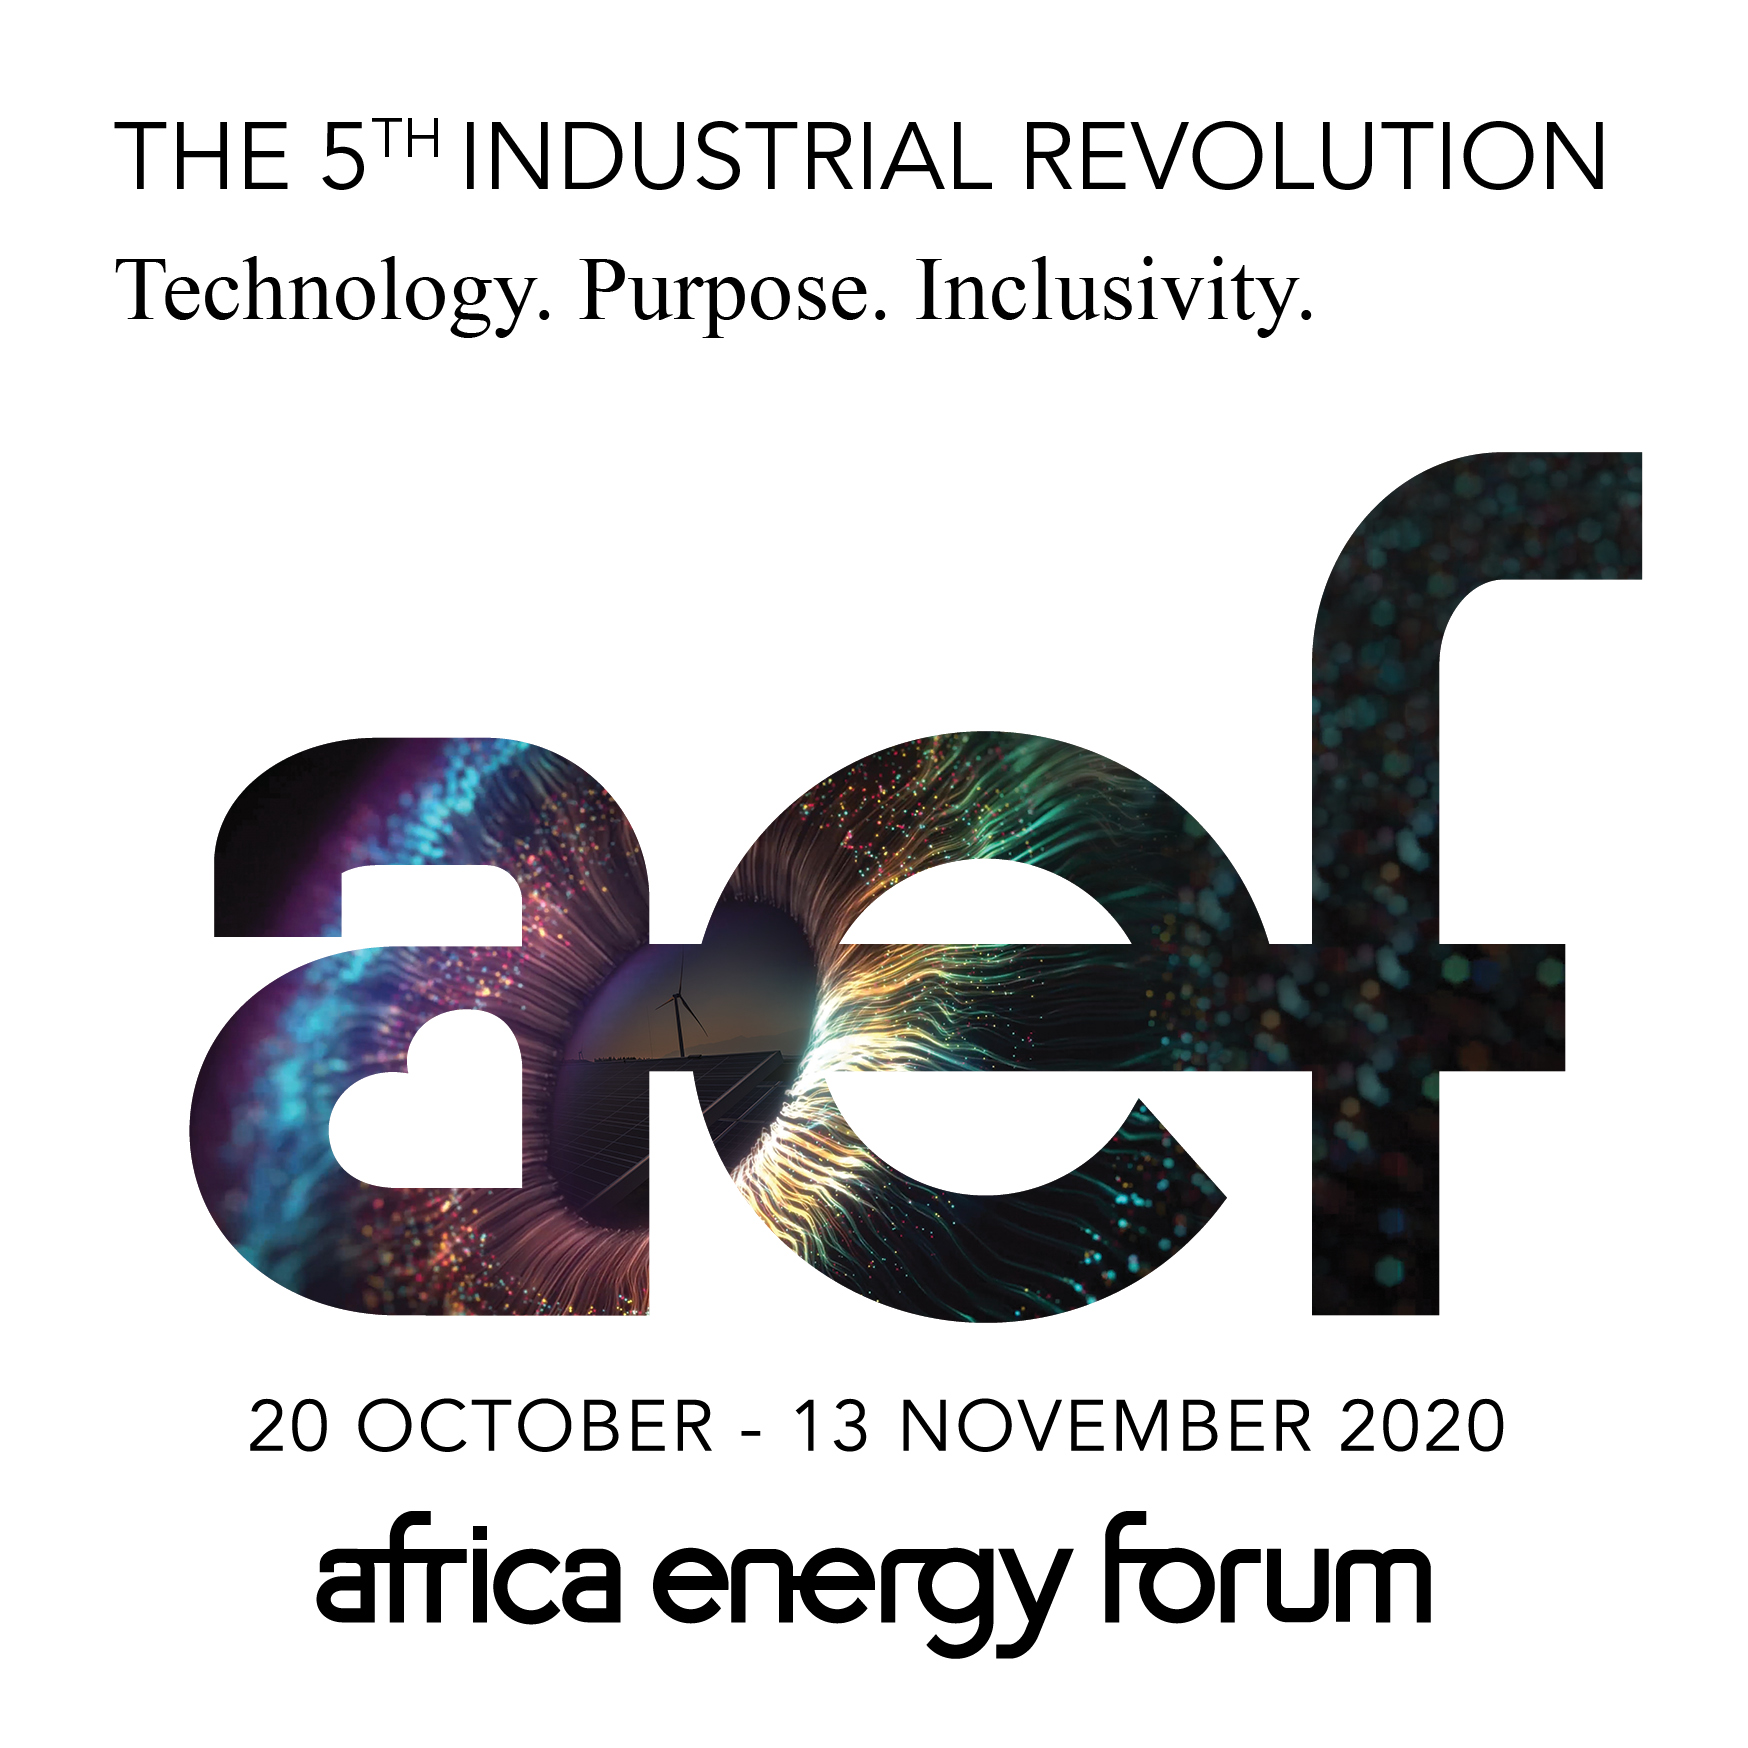 Africa Energy Forum